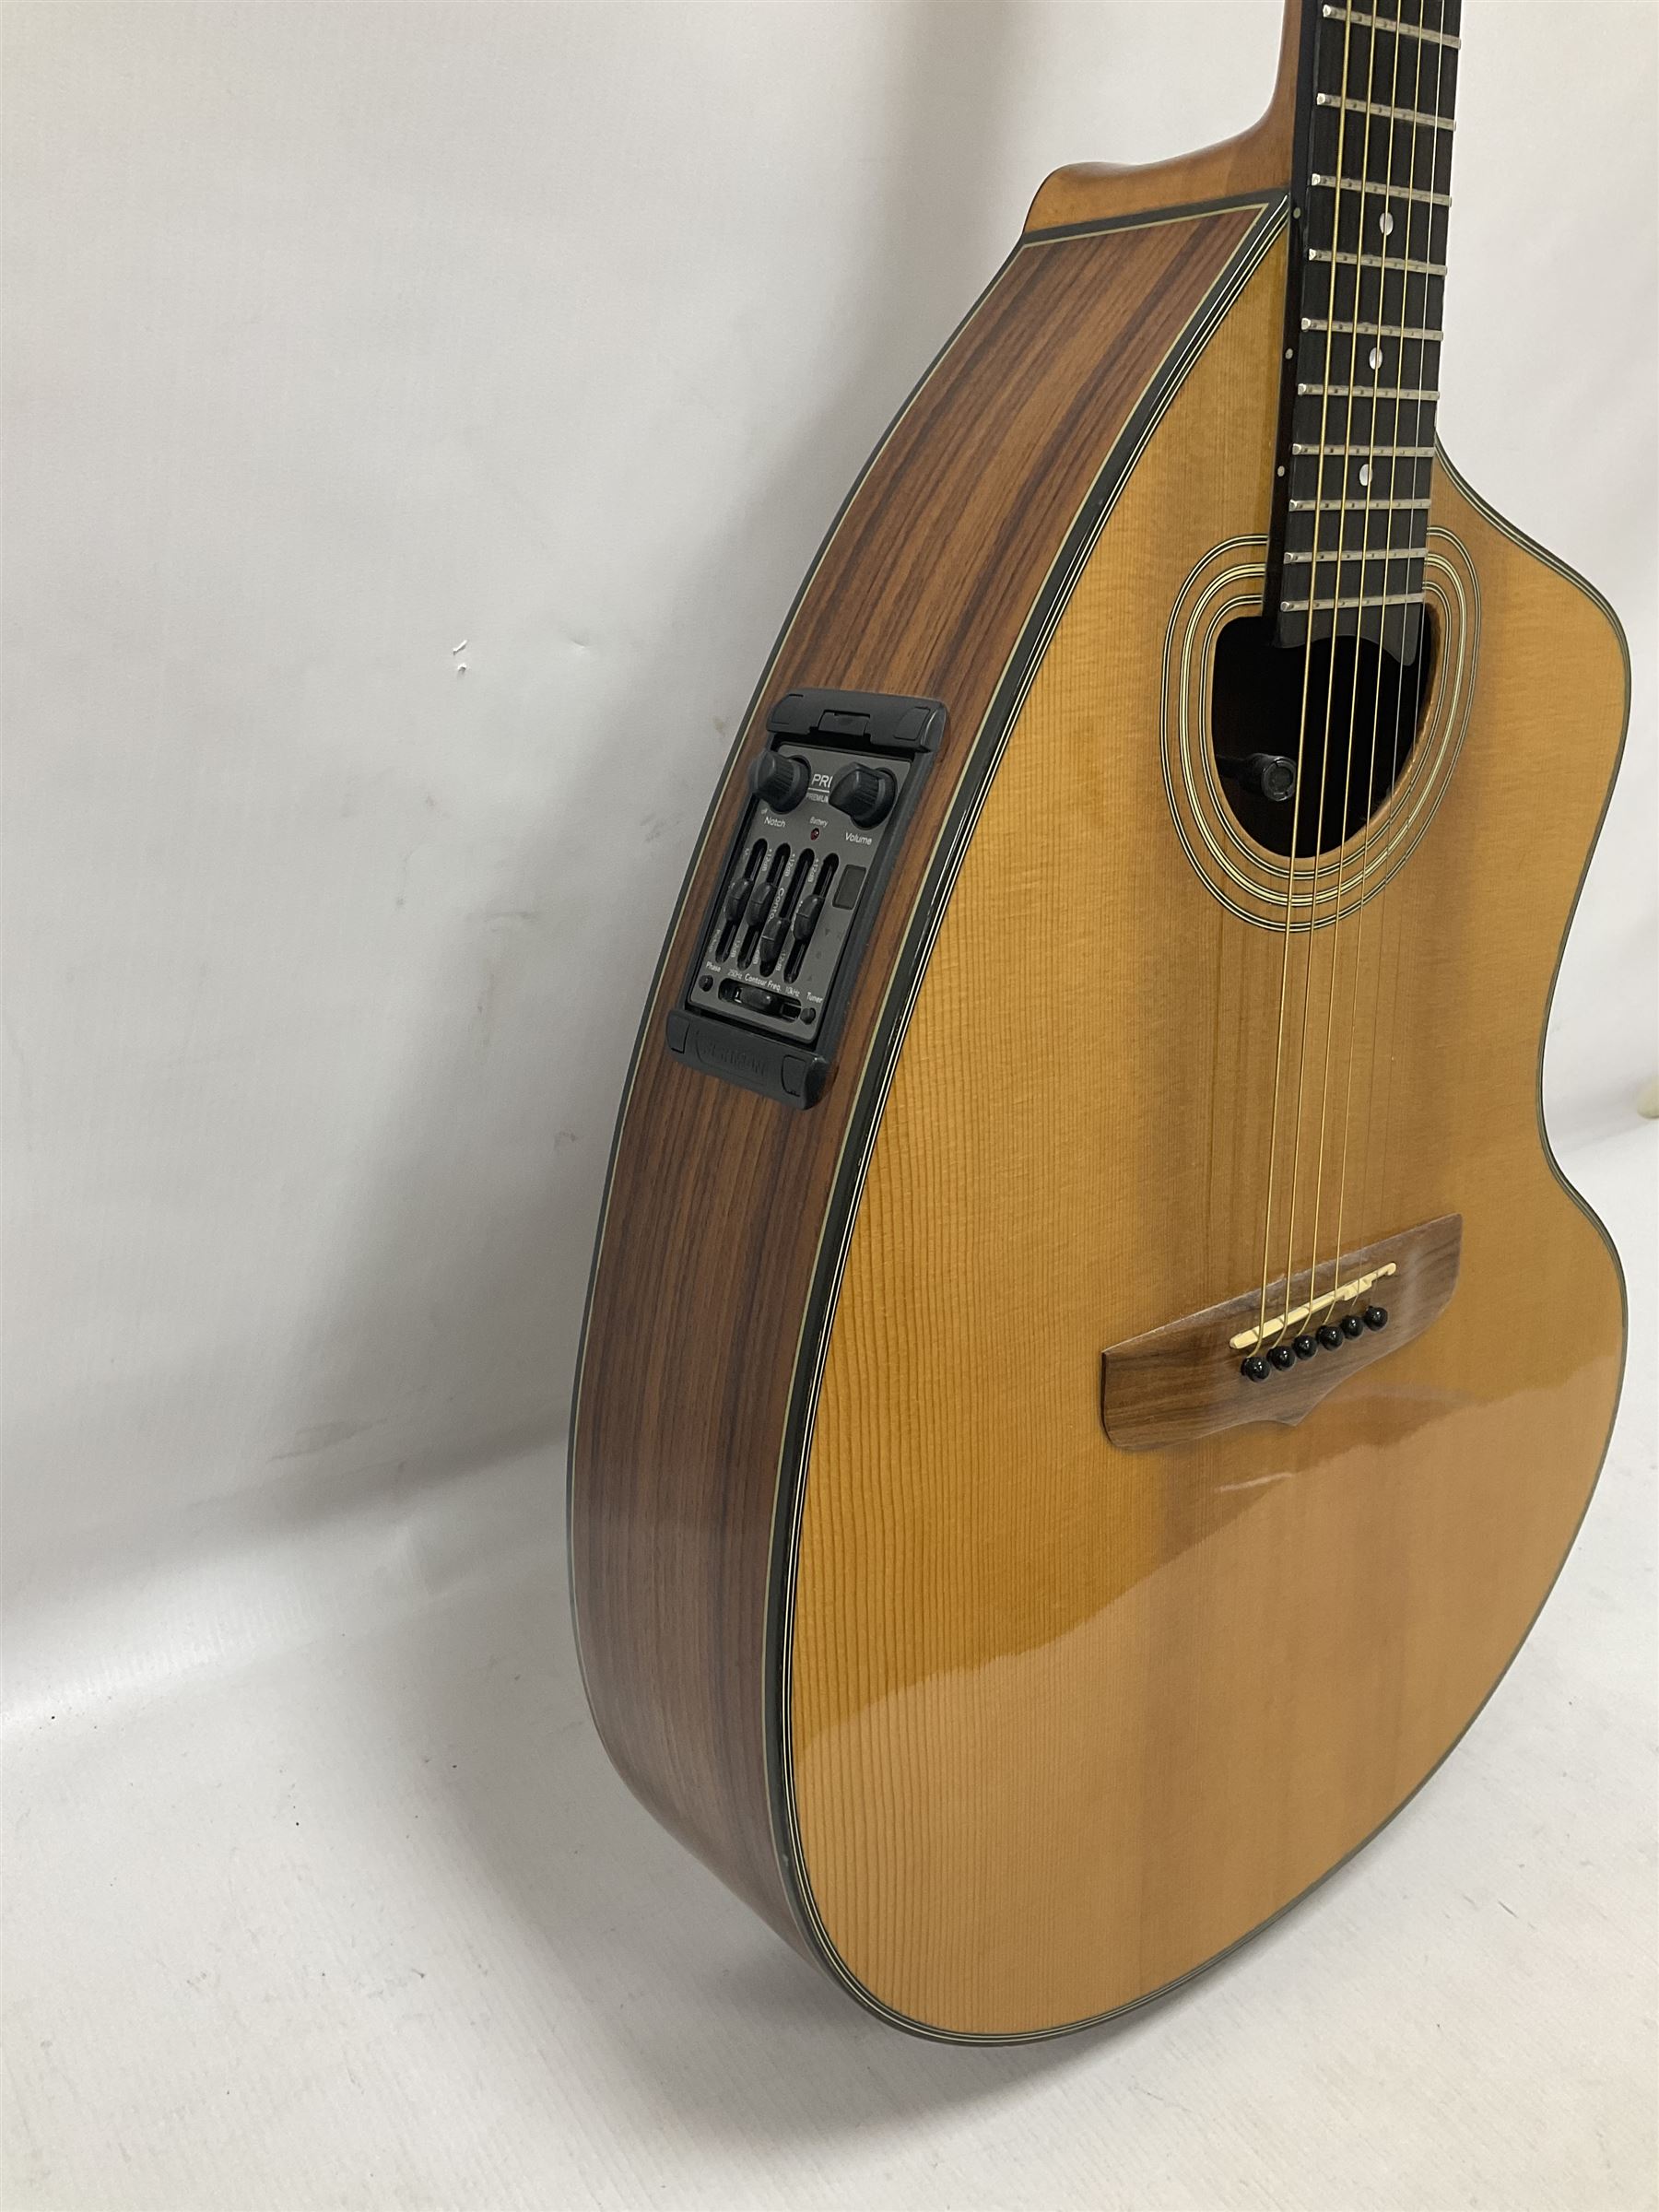 Brazilian Giannini Craviola six string acoustic guitar - Image 7 of 21